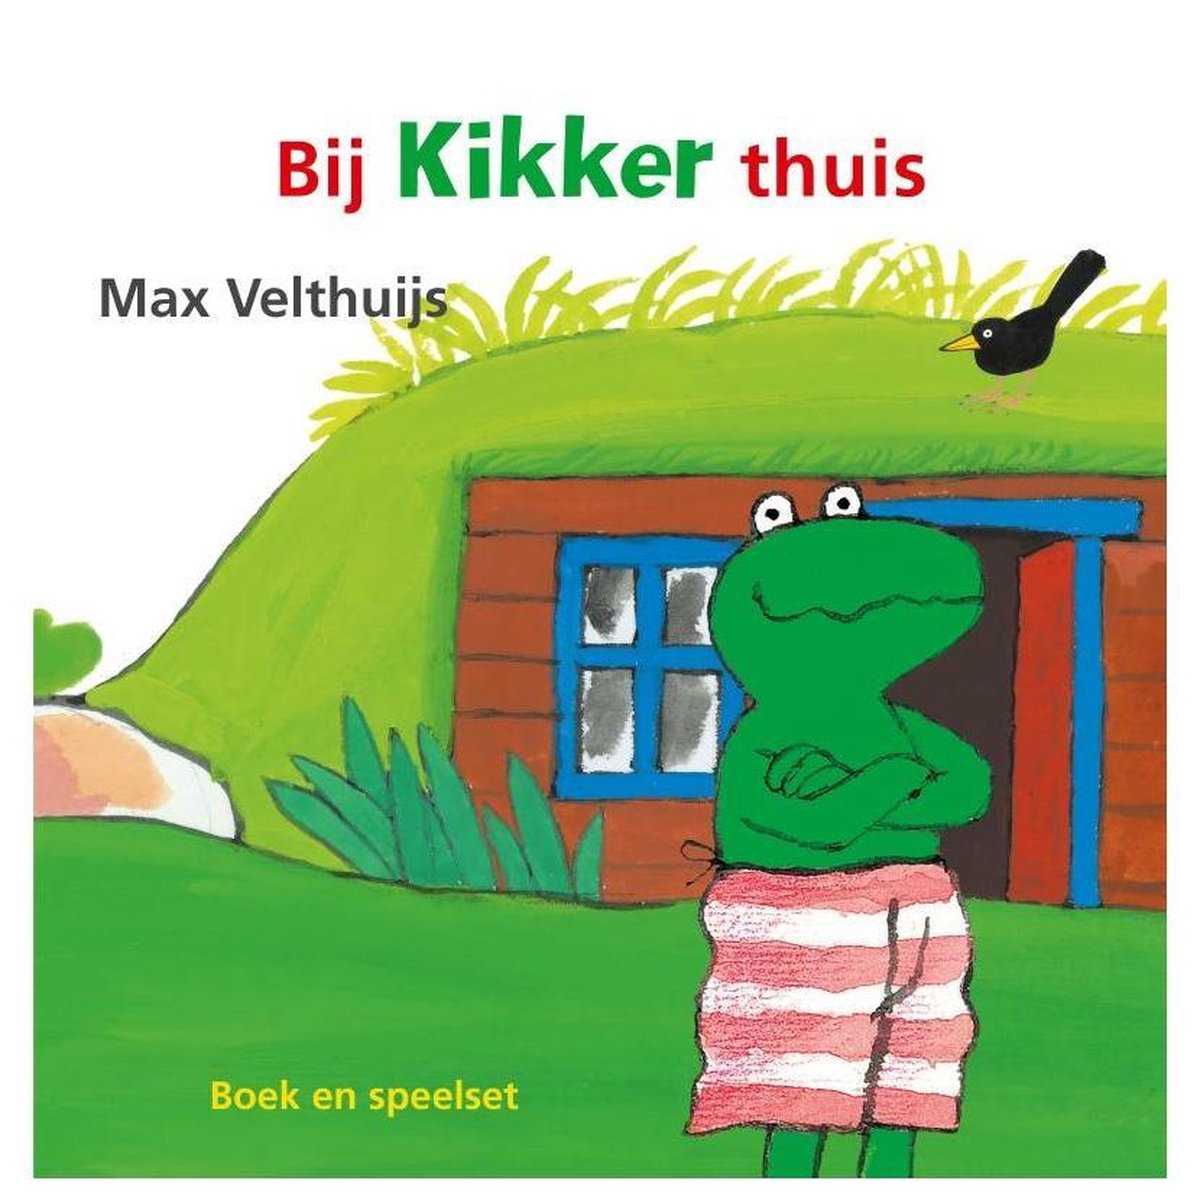 Kindercentrum kousen lont Bij Kikker thuis, Max Velthuijs | 9789025874667 | Boeken | bol.com